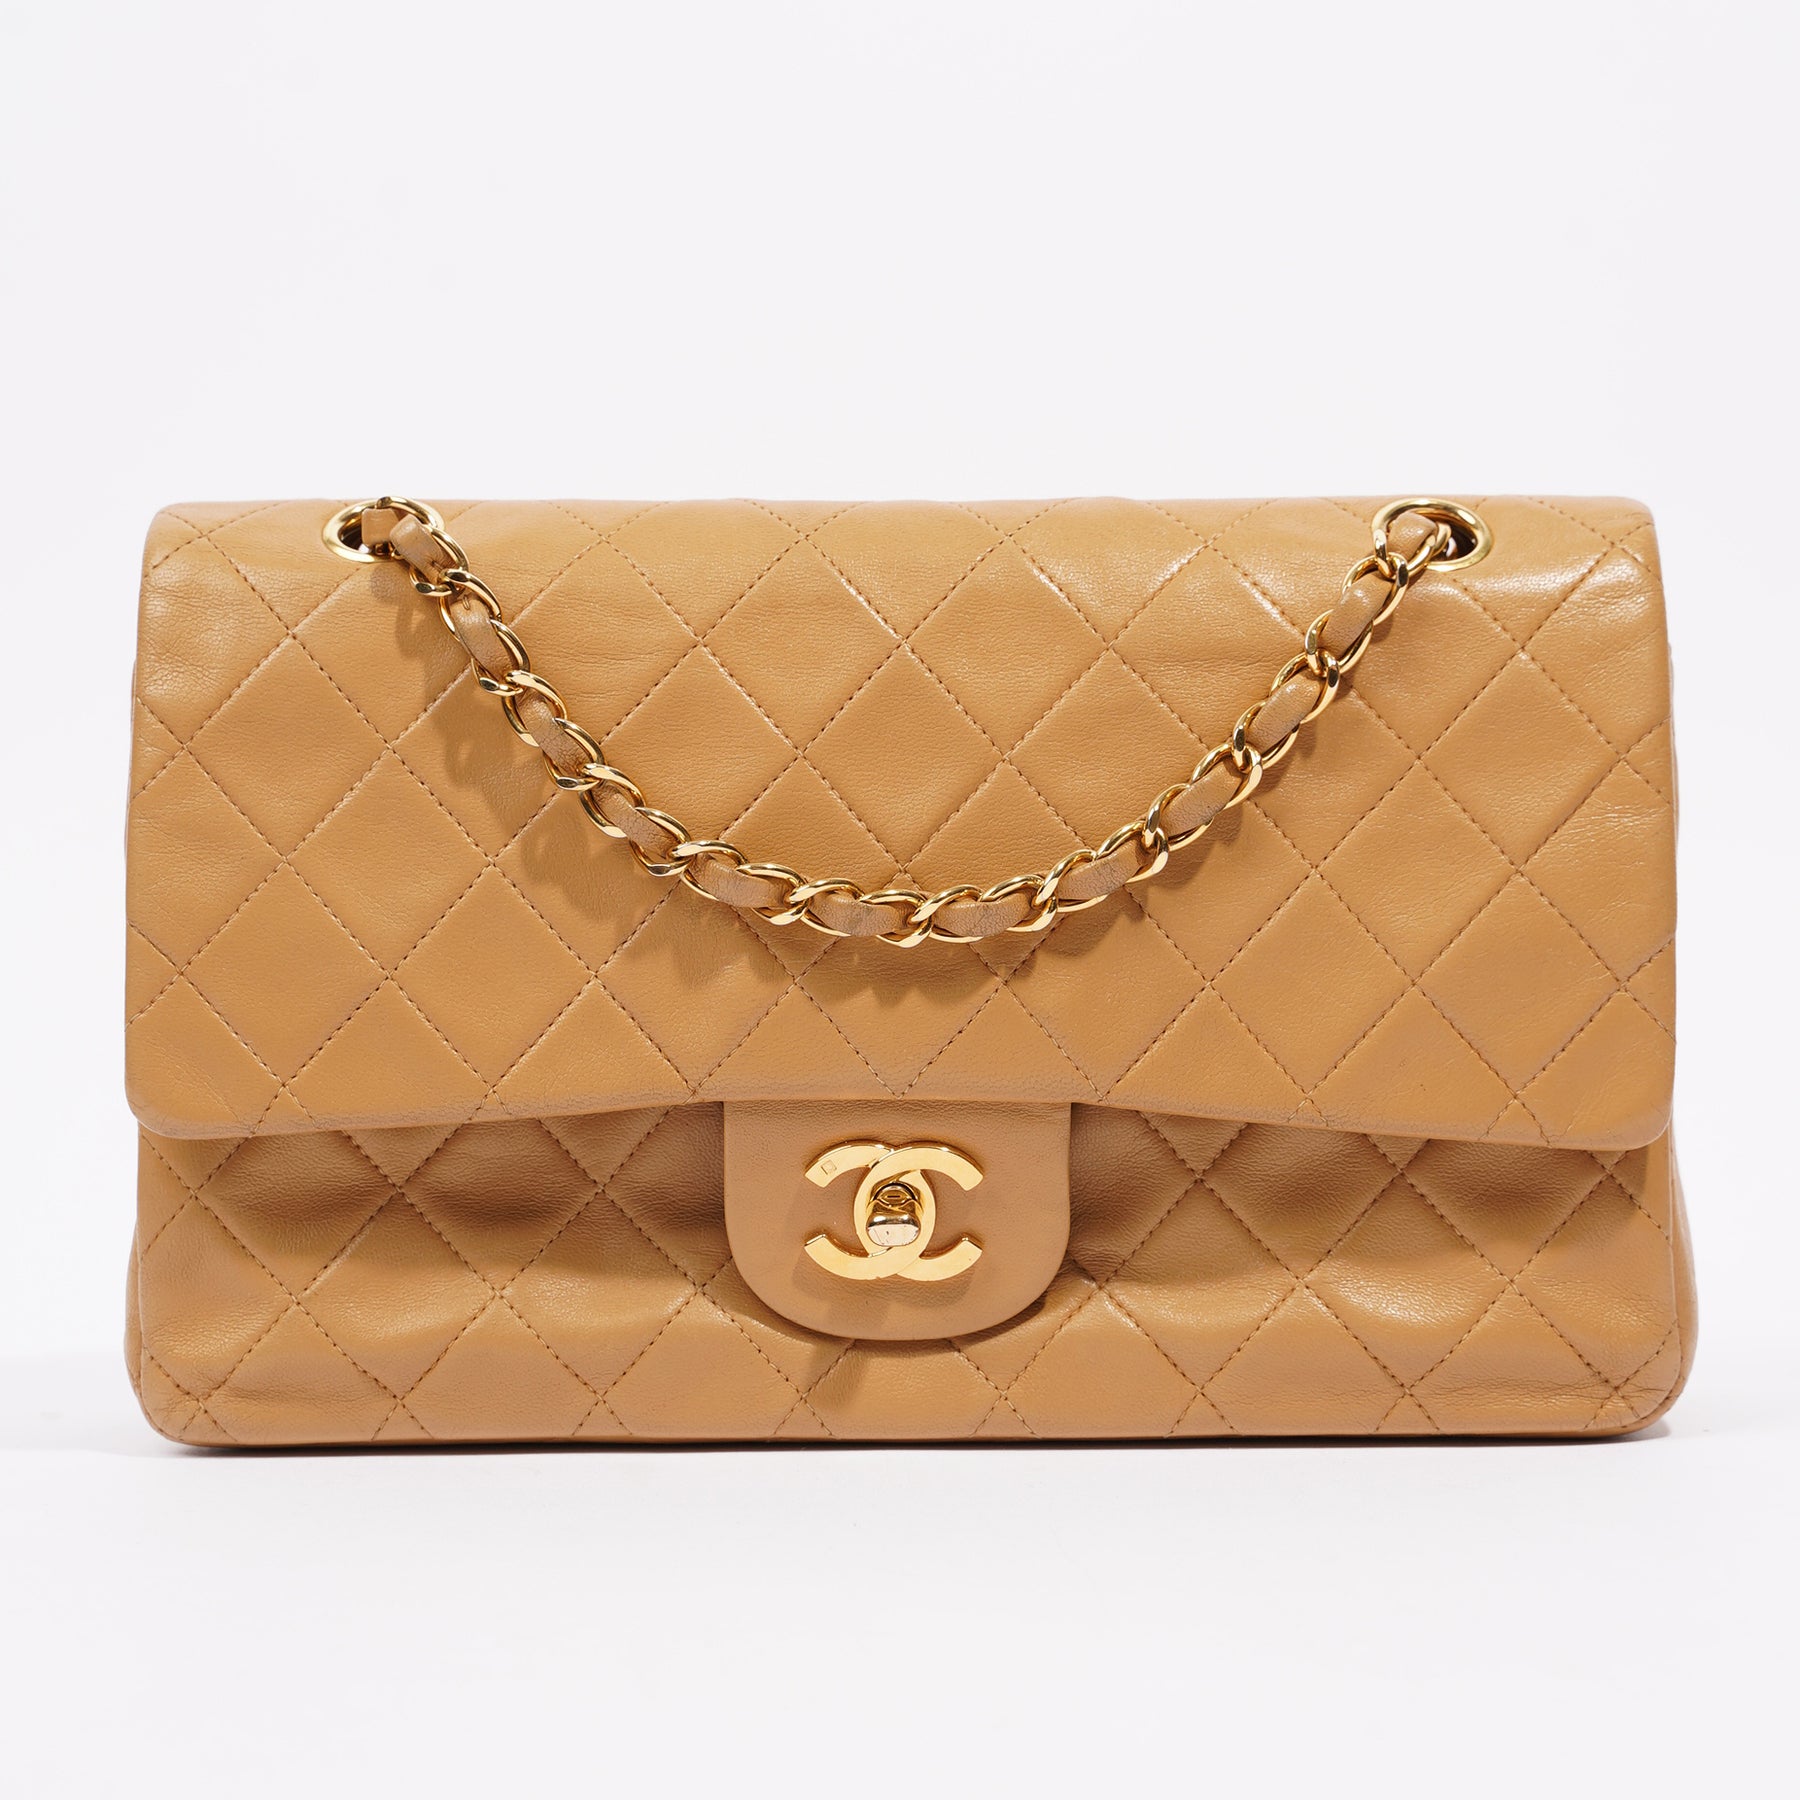 Chanel Clutch Quilted Coco Mark Metal w/Guarantee Card Storage Bag 22.5cm x  34cm